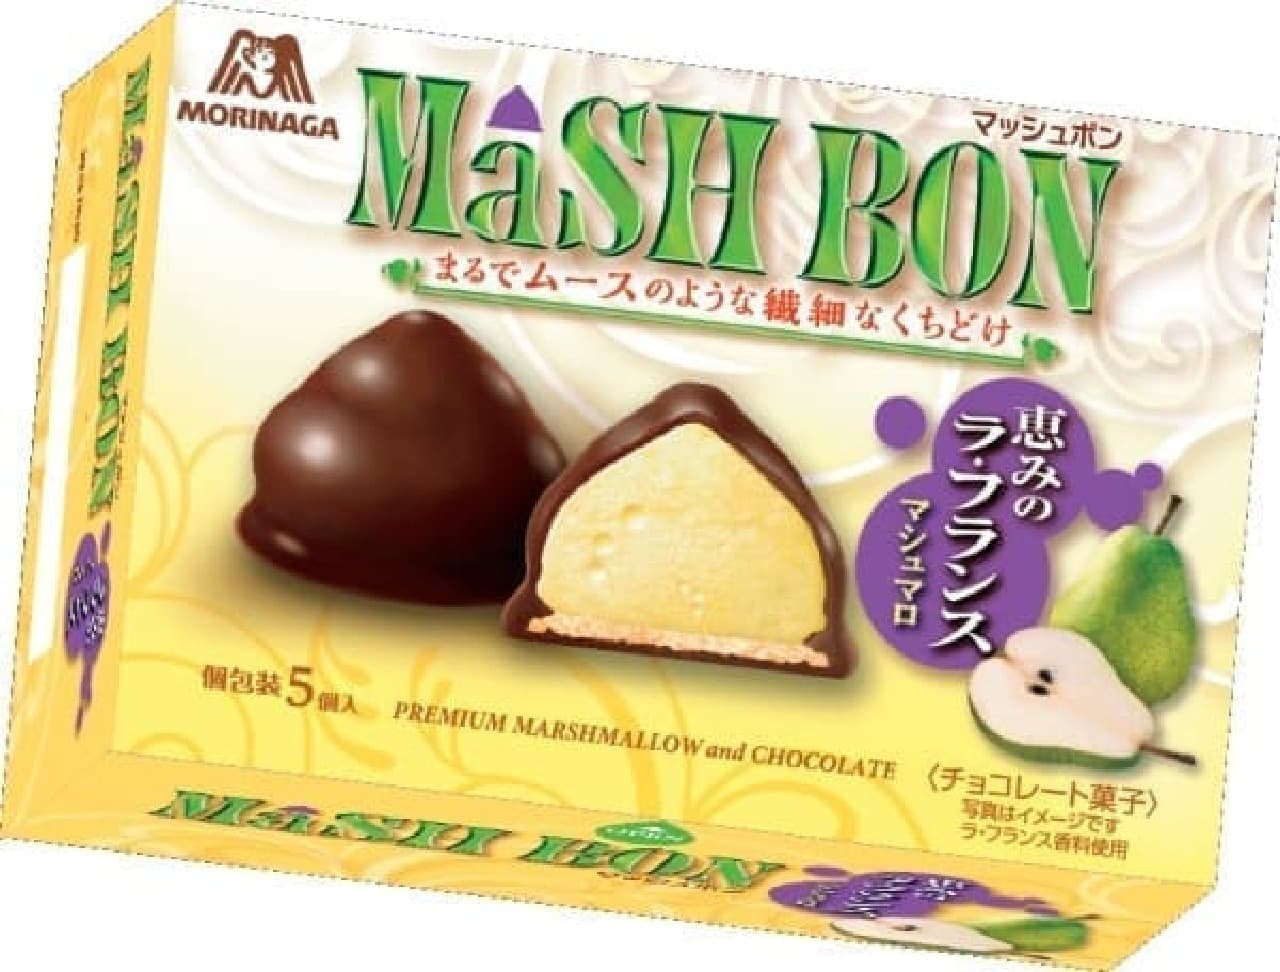 "Mashbon" that melts softly and has a La France flavor!